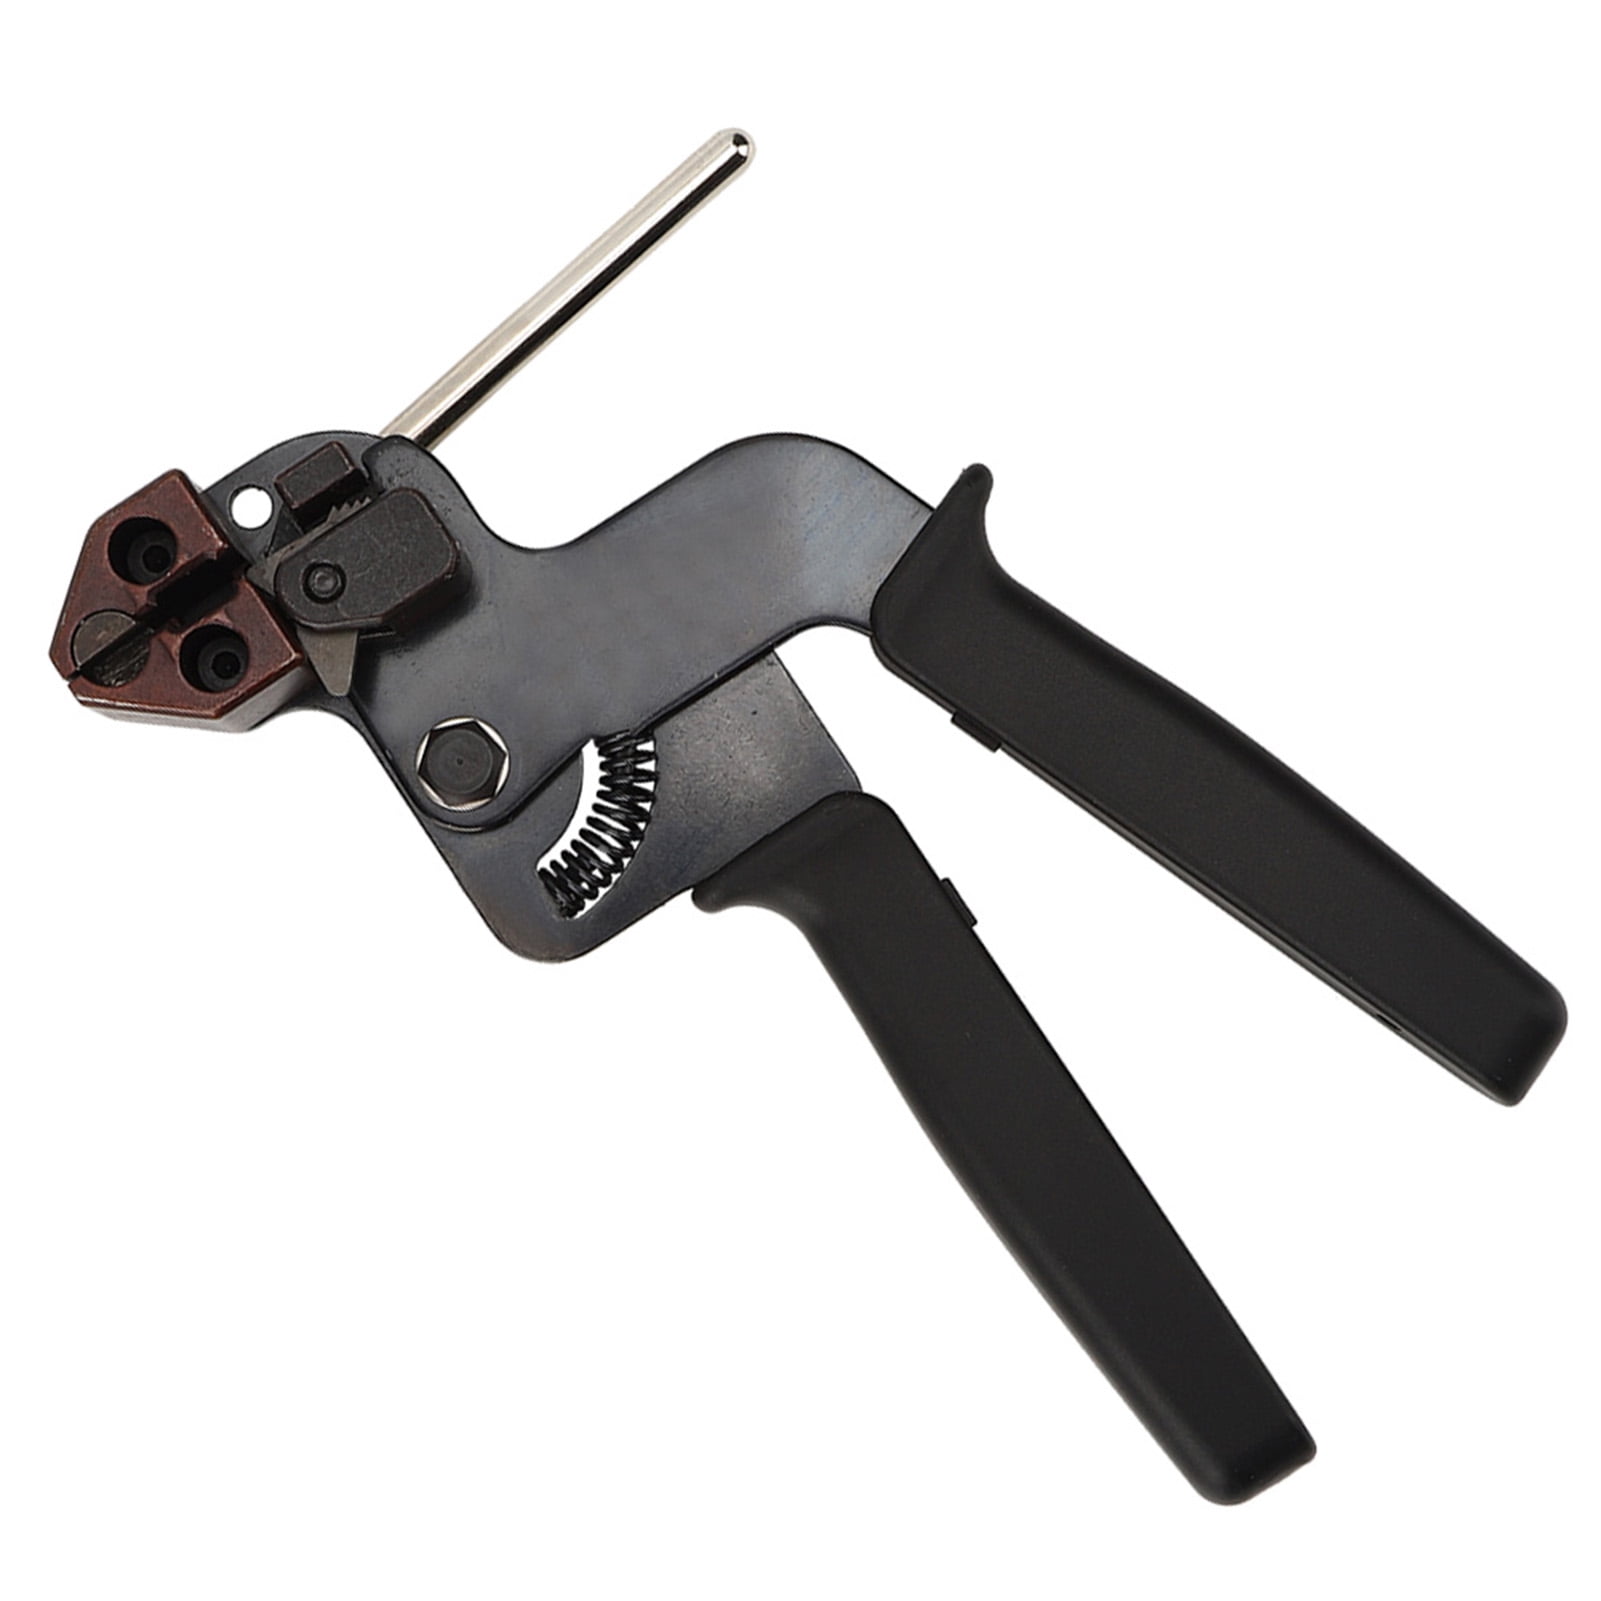 Stainless Steel Metal Cable Tie Fasten Gun Pliers Crimper Tensioner Cutter Tool/ 